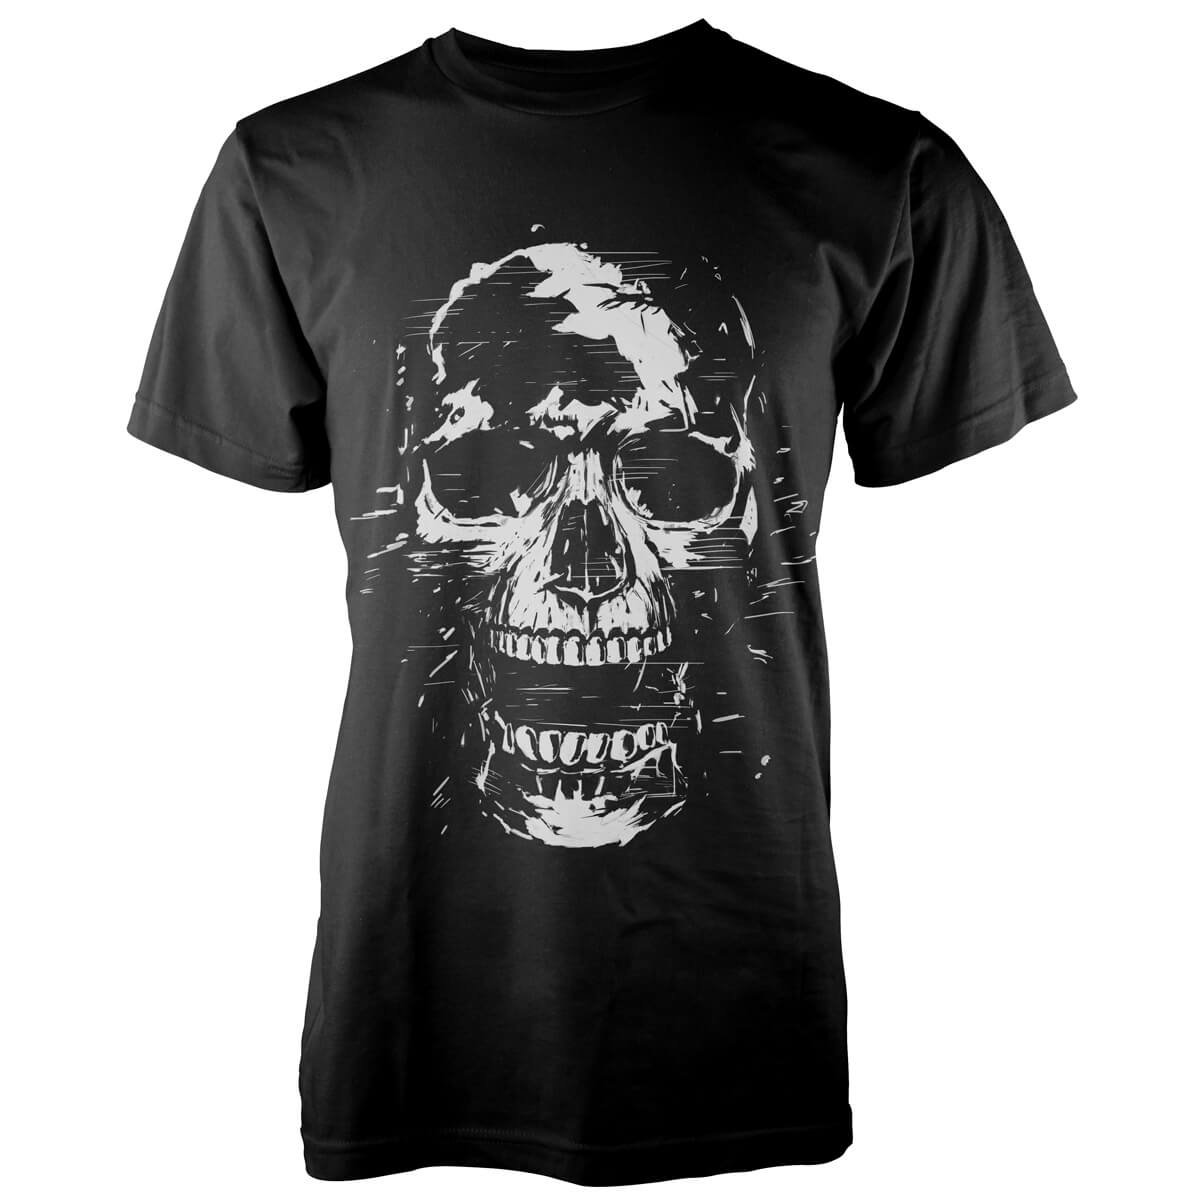 Balazs Solti Scream Black T-Shirt - S